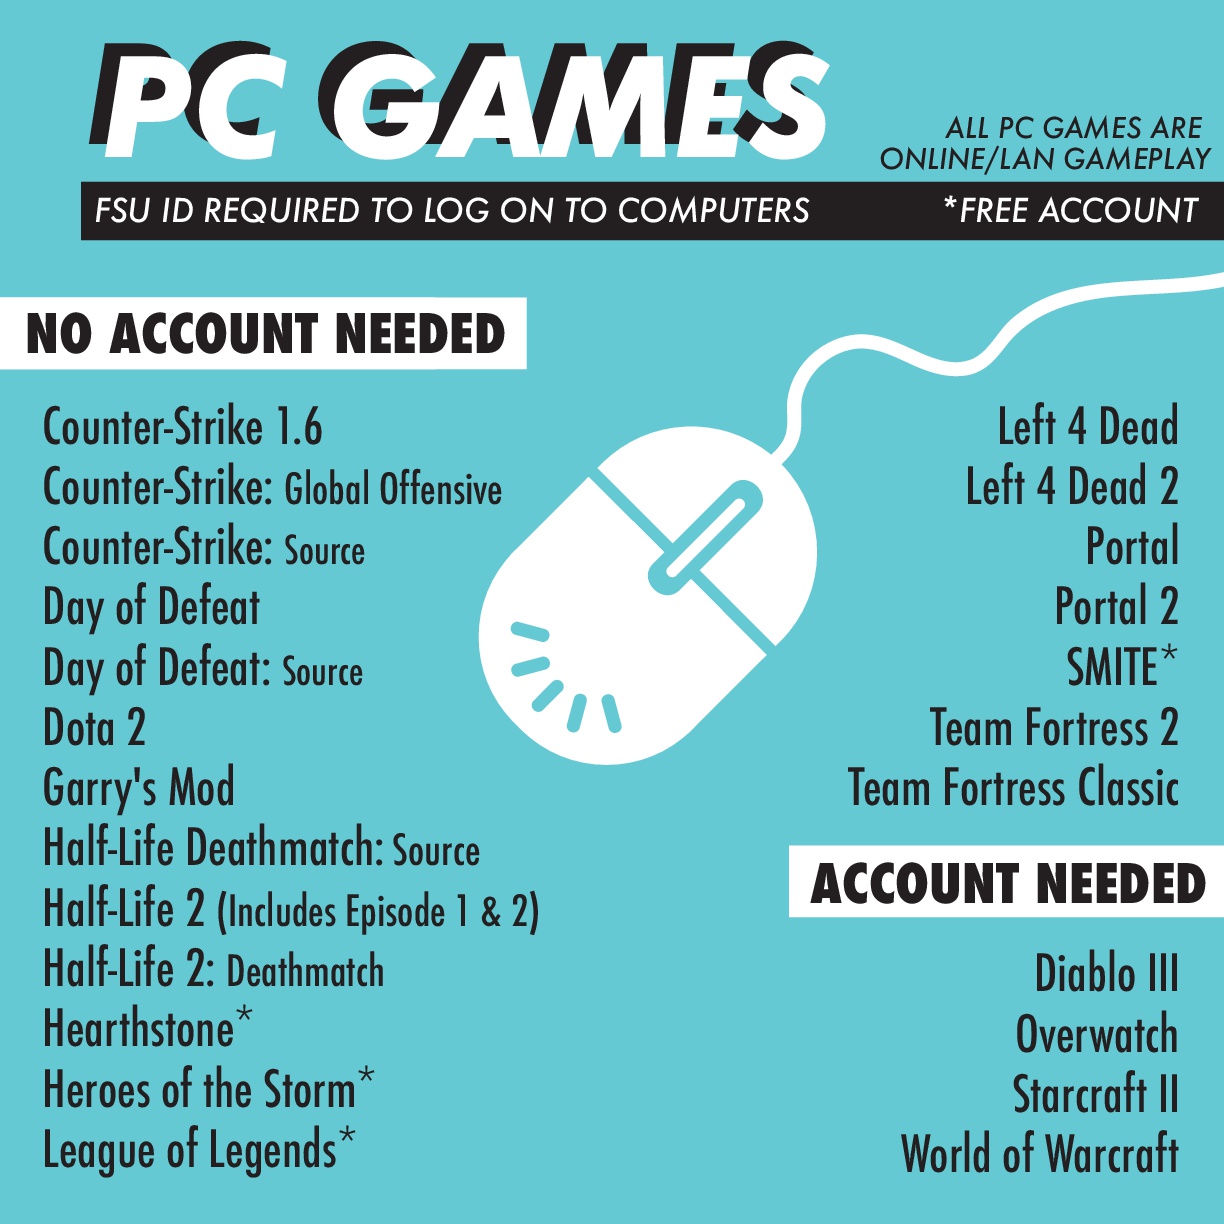 ASLC Student Life Gaming - PC Games